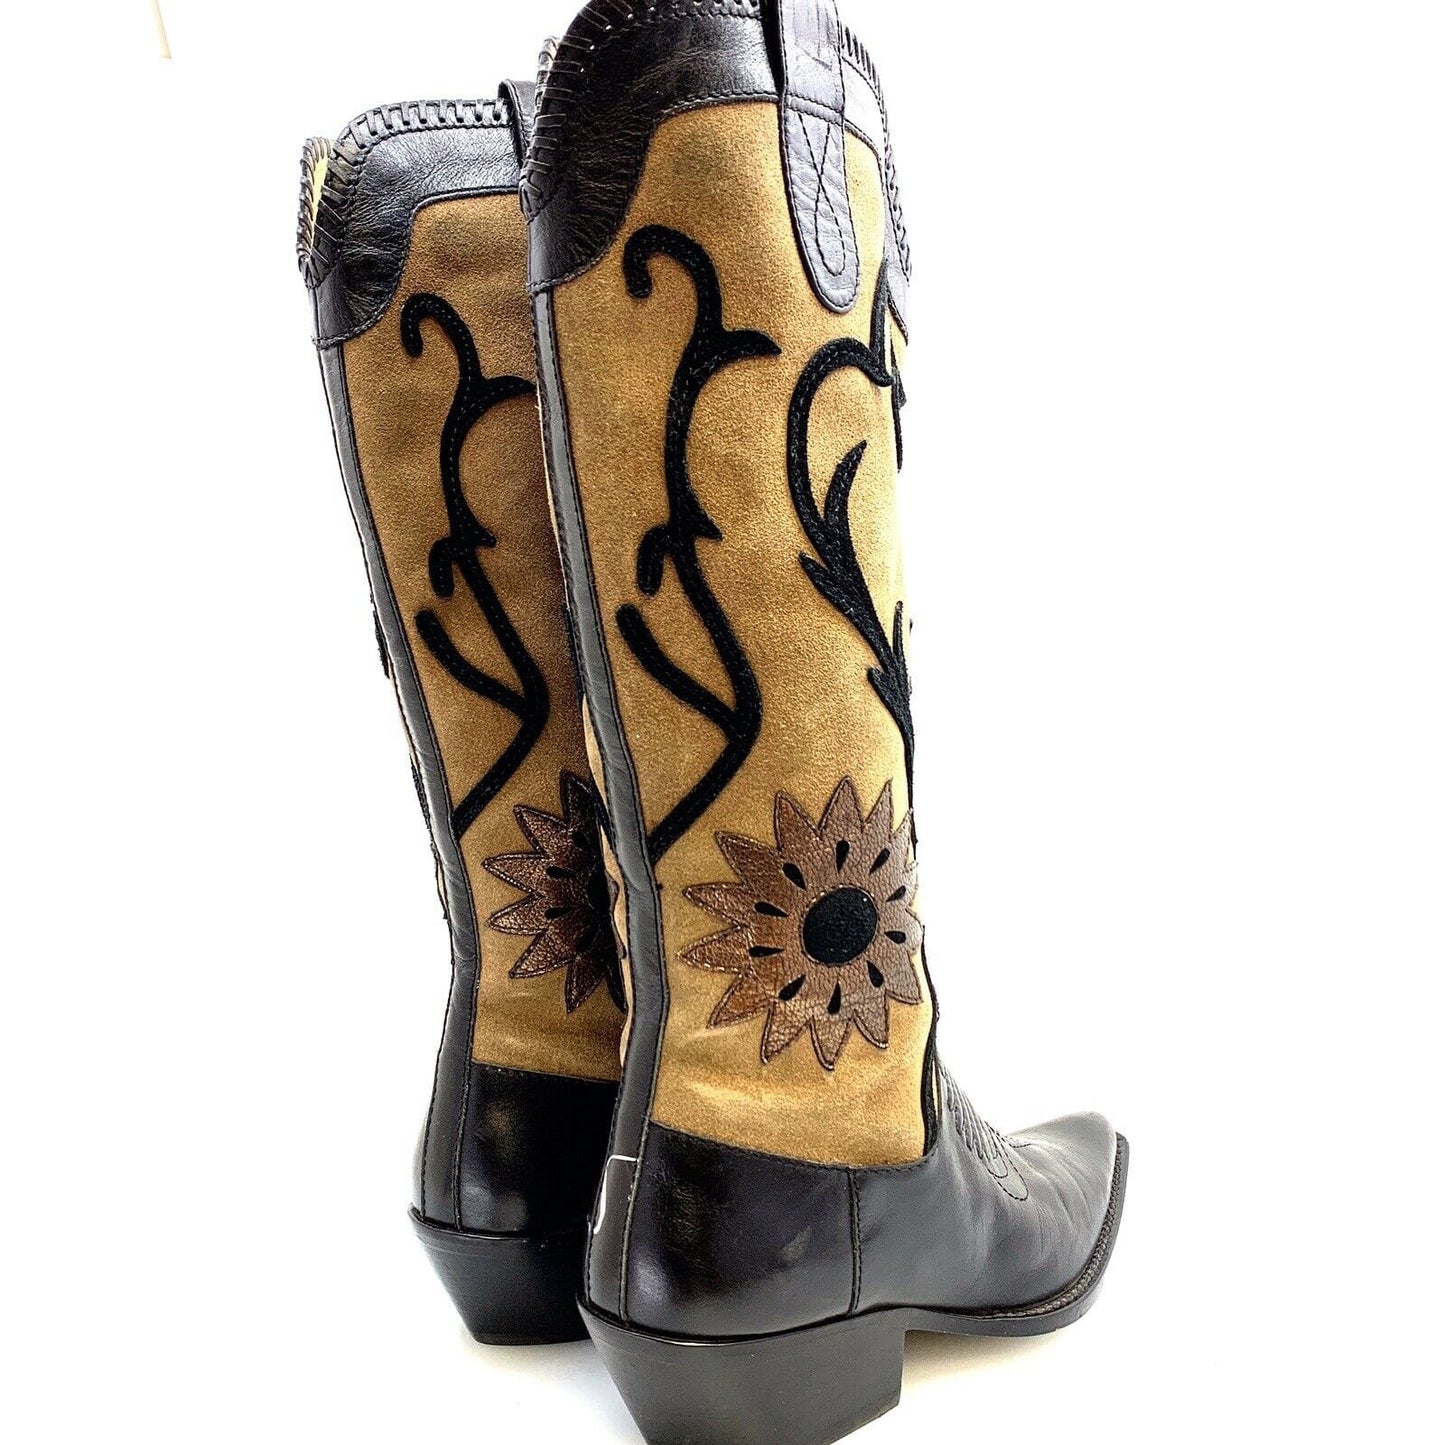 Paolo Womens Western Fashion Boots, Black / Brown - Size 4M - parsimonyshoppes